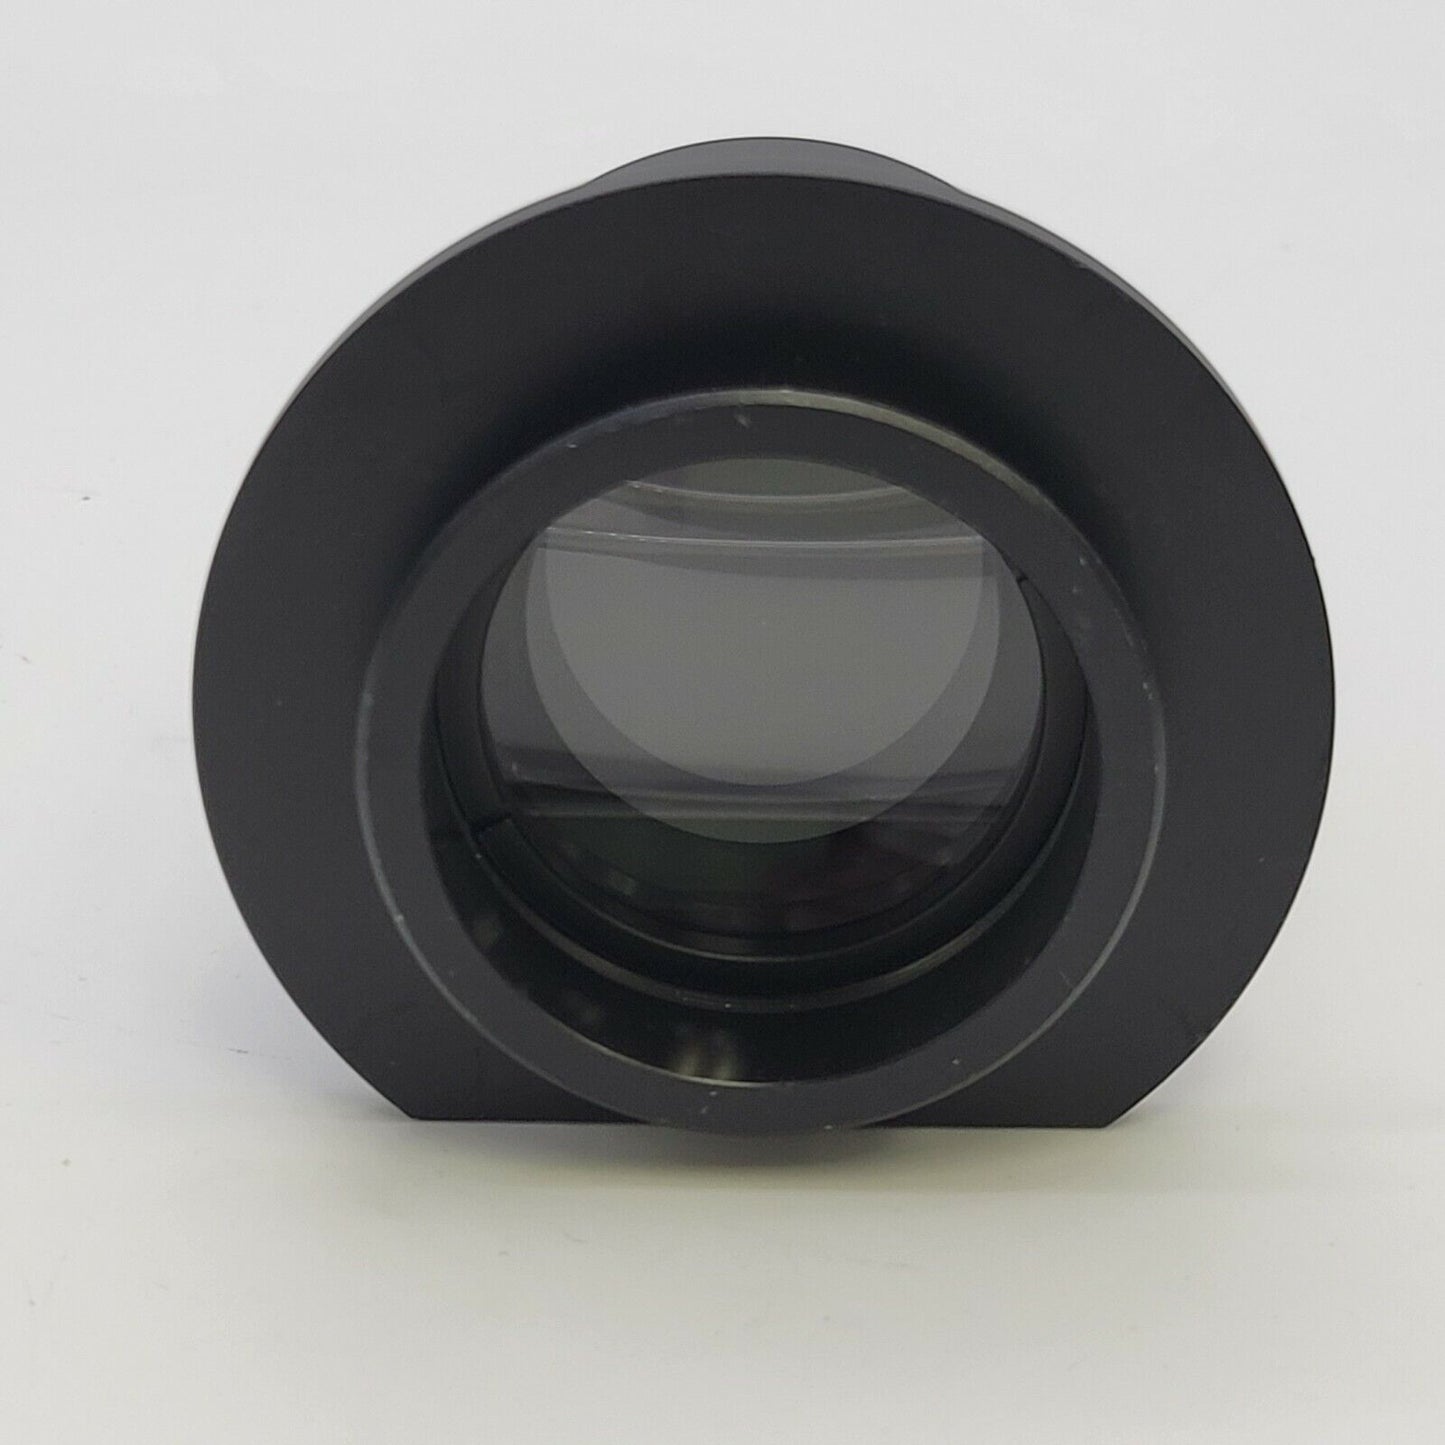 X-Cite Exfo Leica Microscope Collimating Adaptor 810-00033 - microscopemarketplace